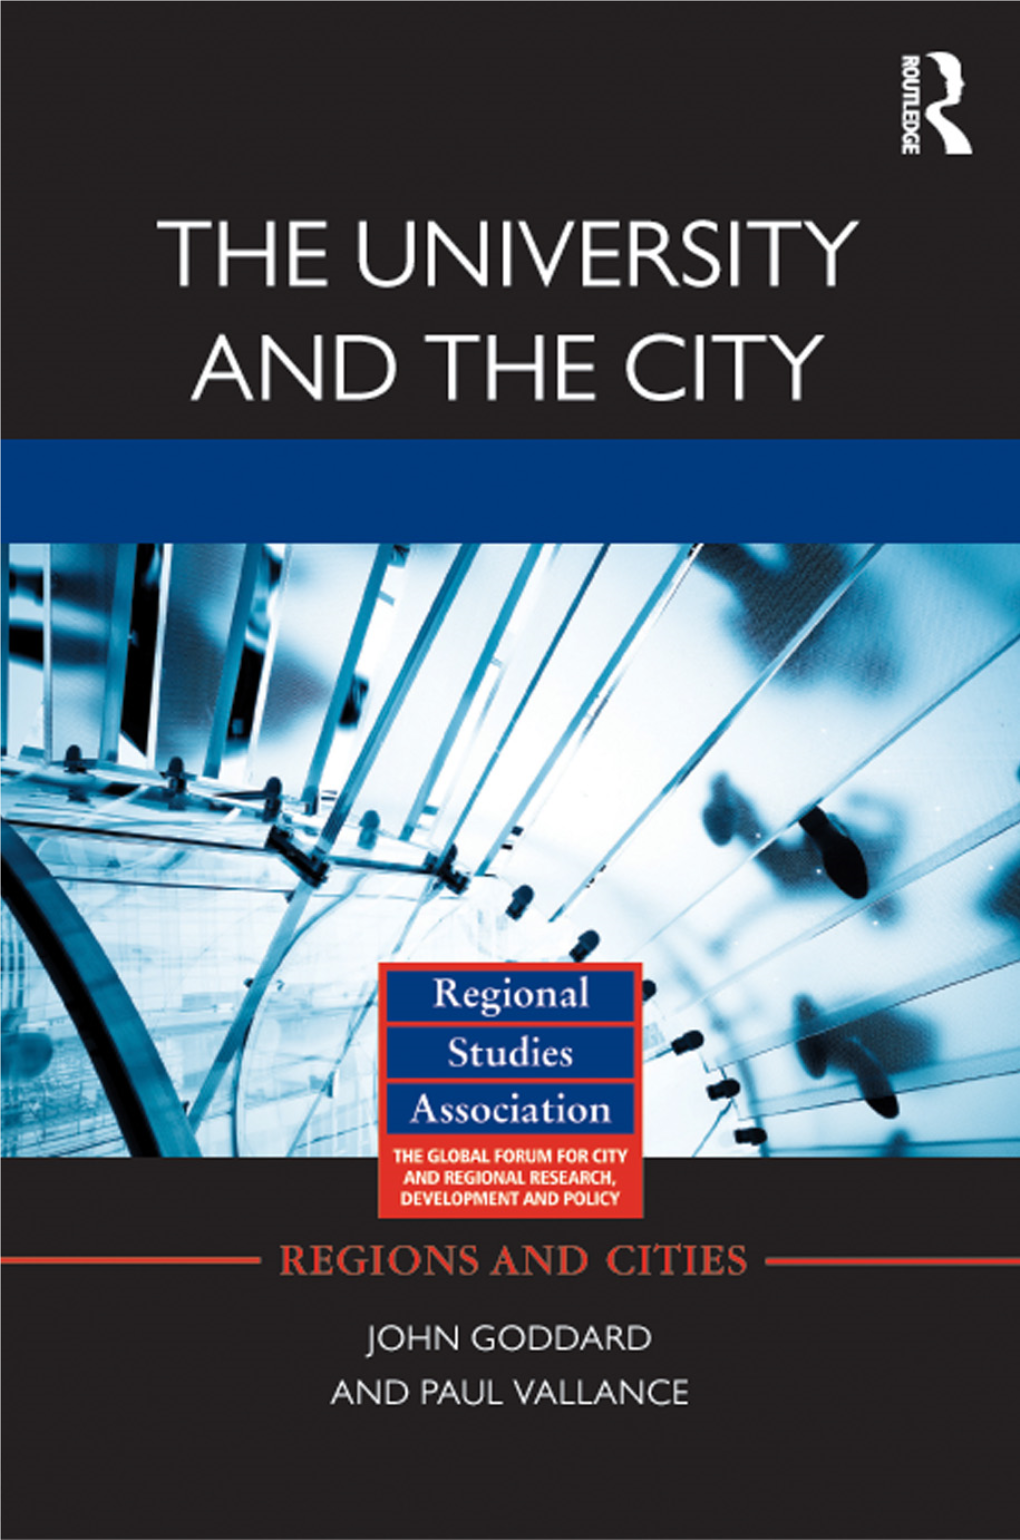 (Regions and Cities) John Goddard, Paul Vallance-The University And